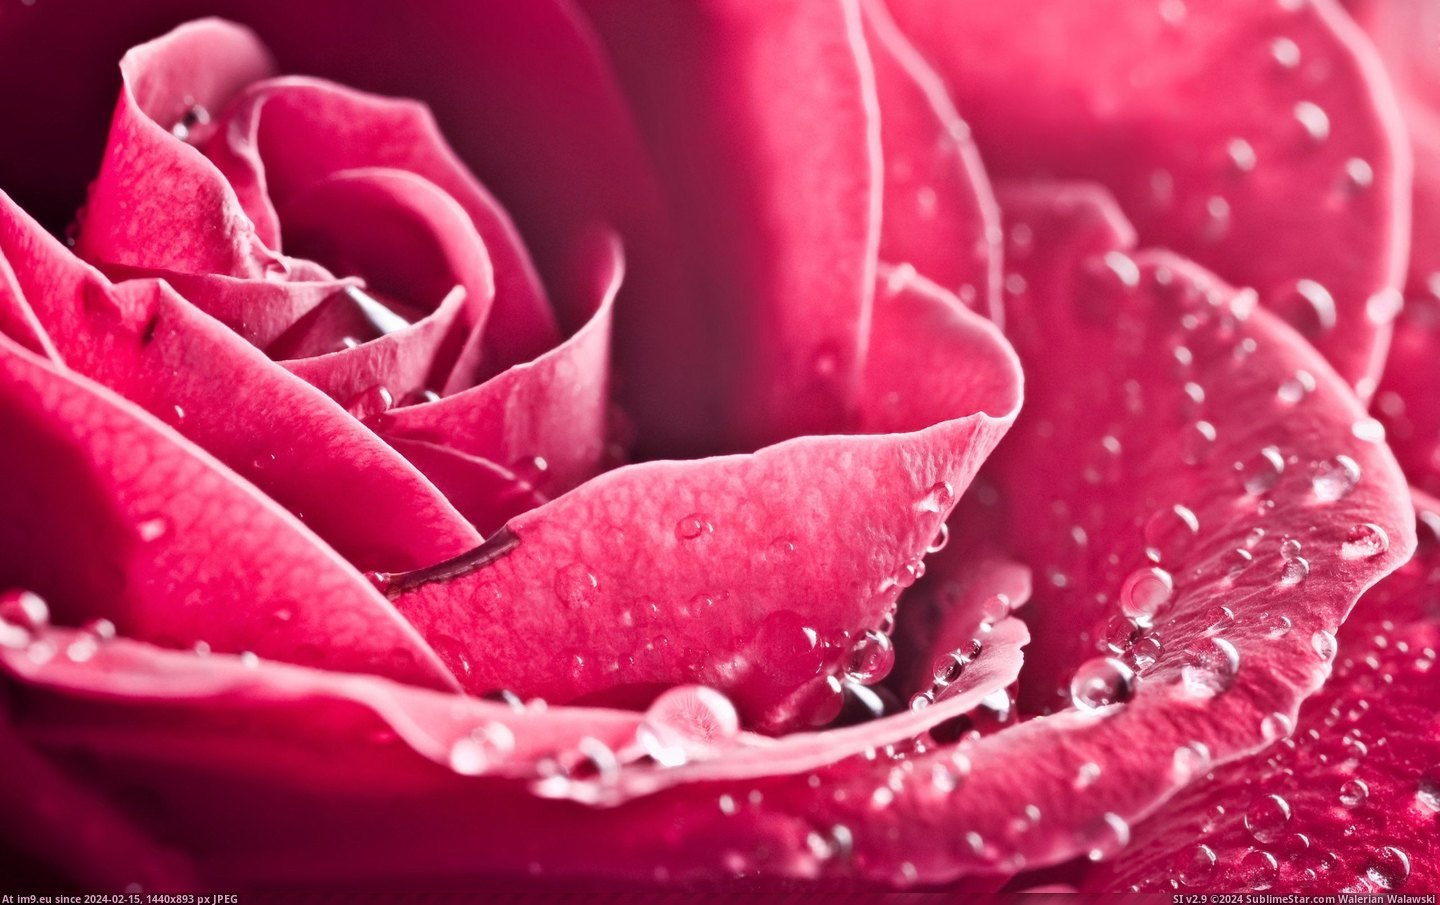 #Wallpaper #Rose #Special #Wide Special Rose Wide HD Wallpaper Pic. (Bild von album Unique HD Wallpapers))